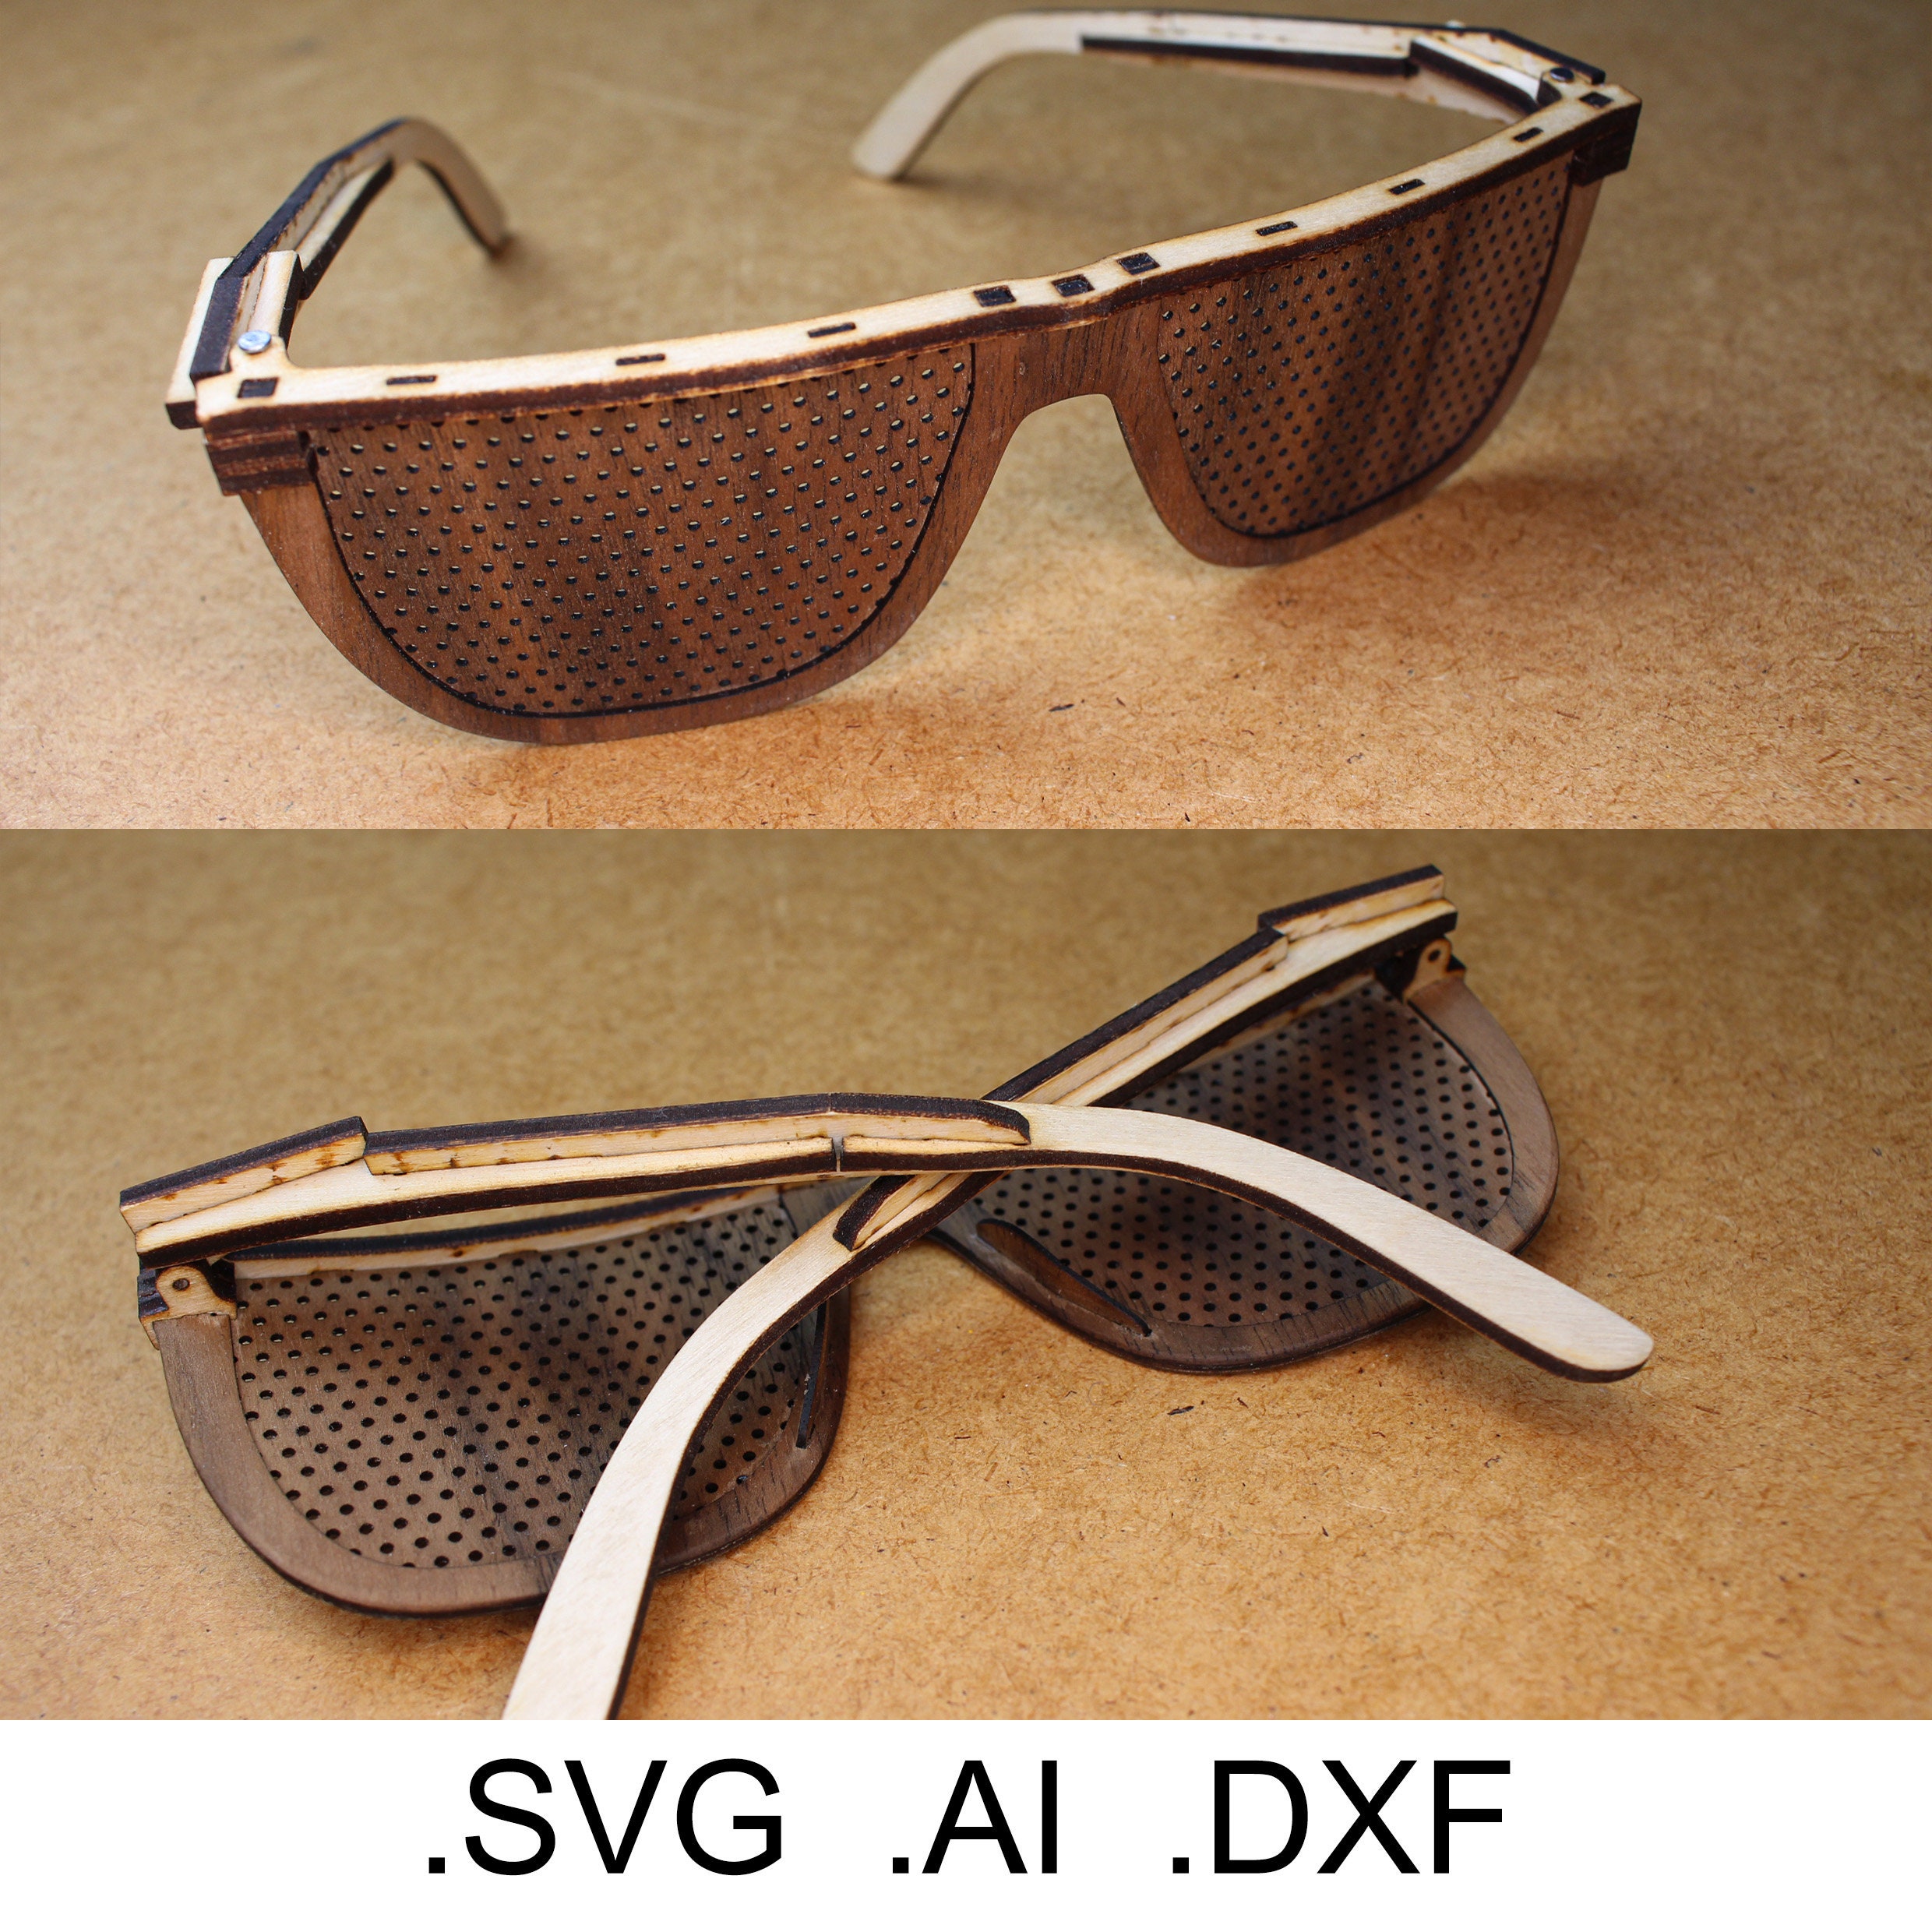 LAER Unisex Adult Round Sunglasses Multicolor Frame, Black Lens (Medium) -  Pack of 1